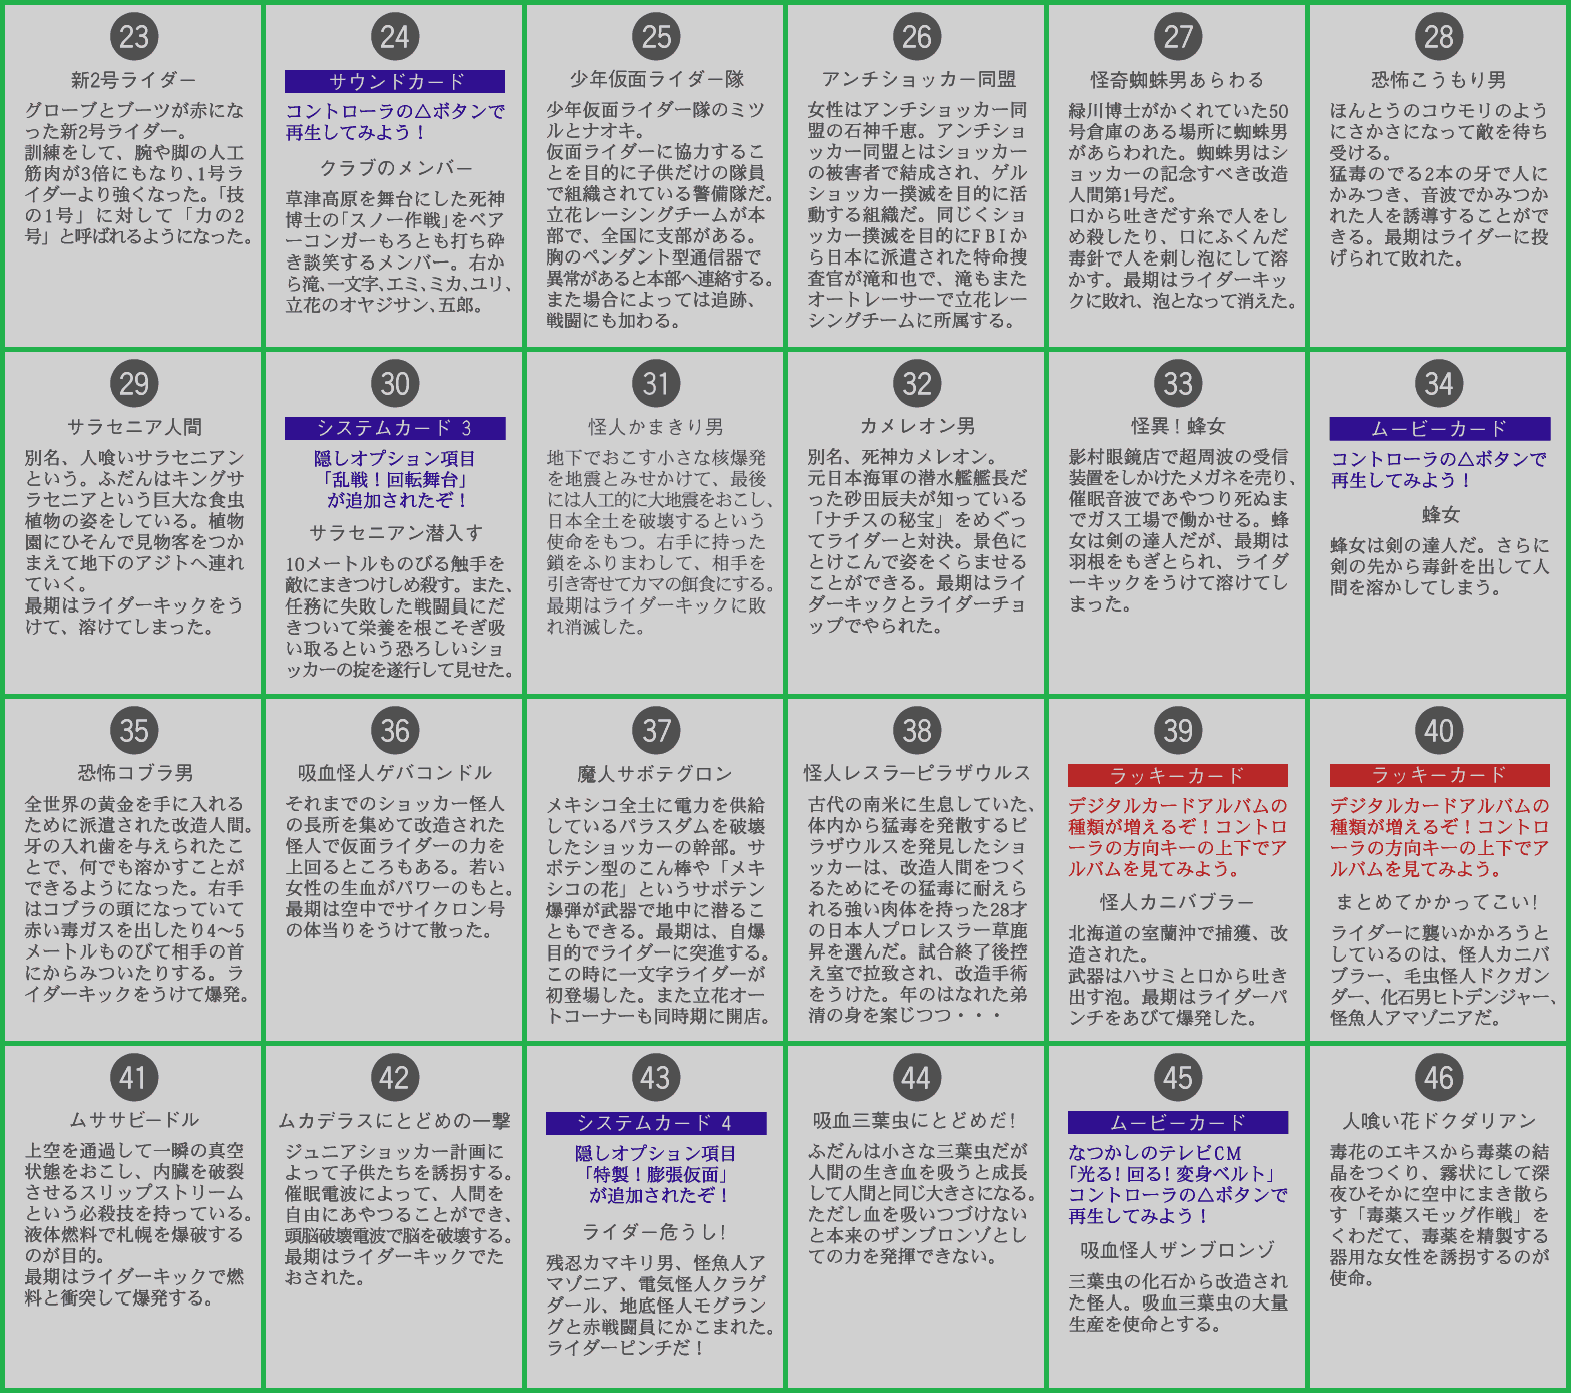 Kamen Rider (JPN) - Digital Cards (Backs) 23~46